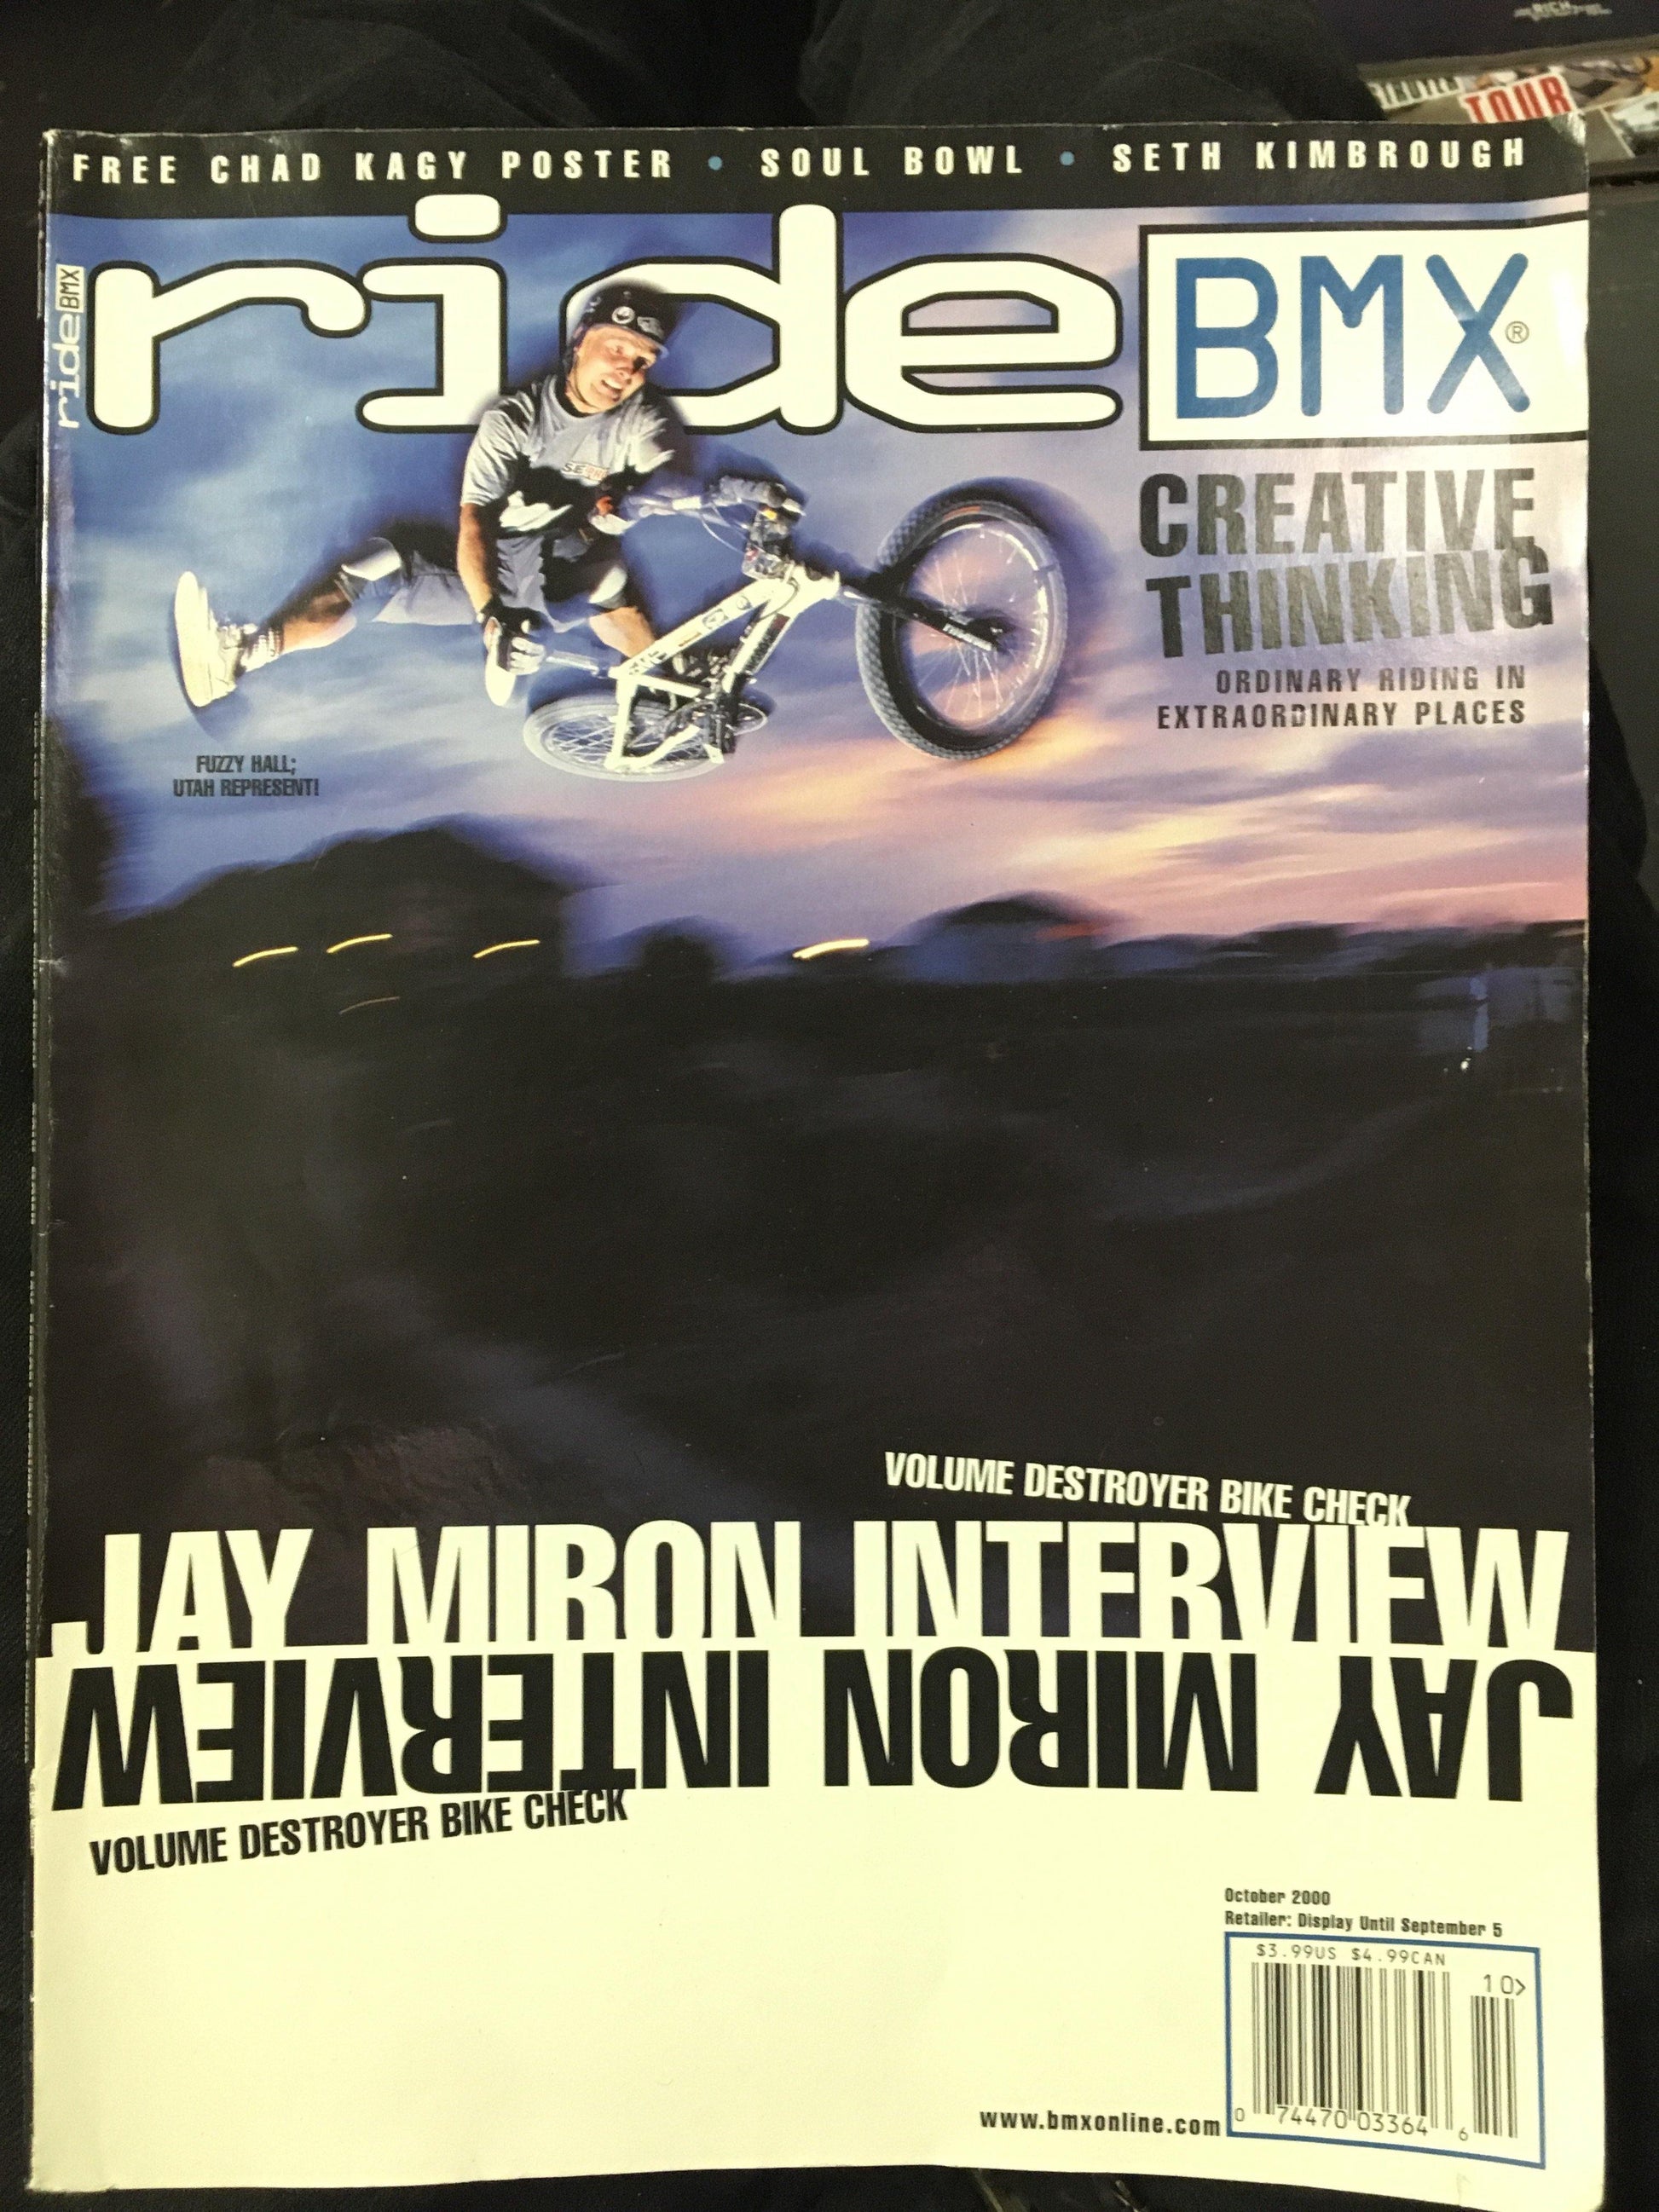 Ride BMX Magazine back issues 2000 - POWERS BMX